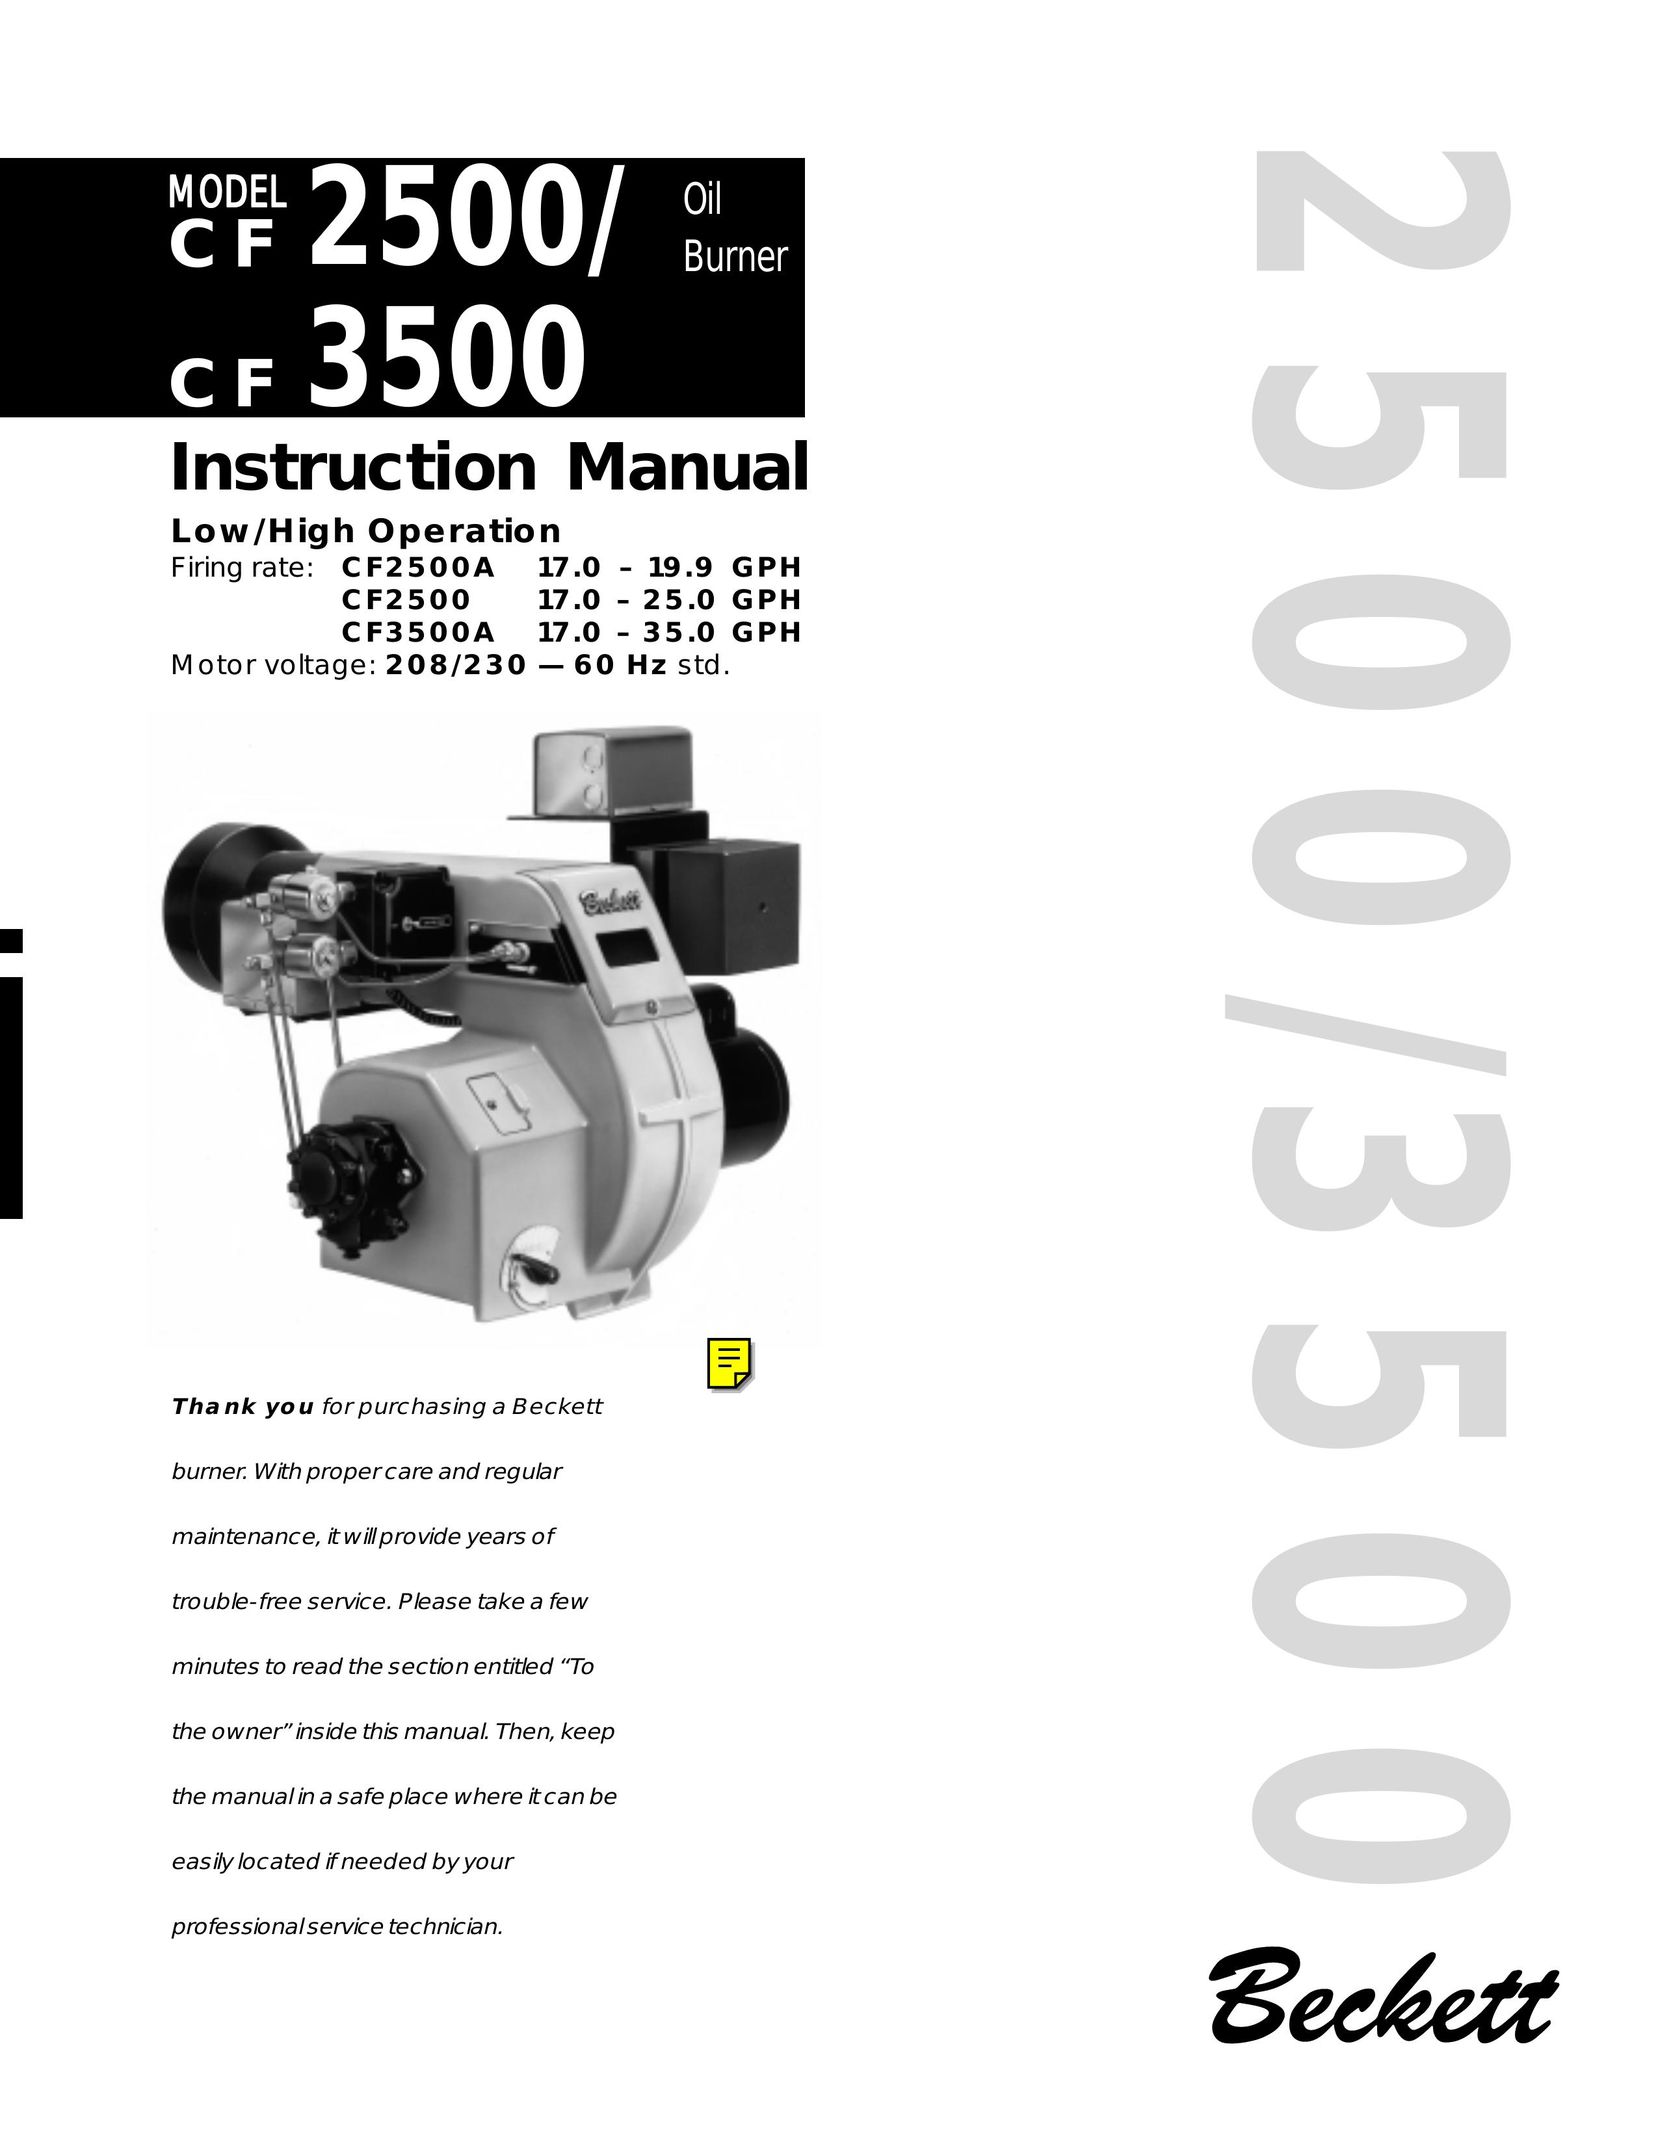 Beckett CF 2500/ 3500 Burner User Manual